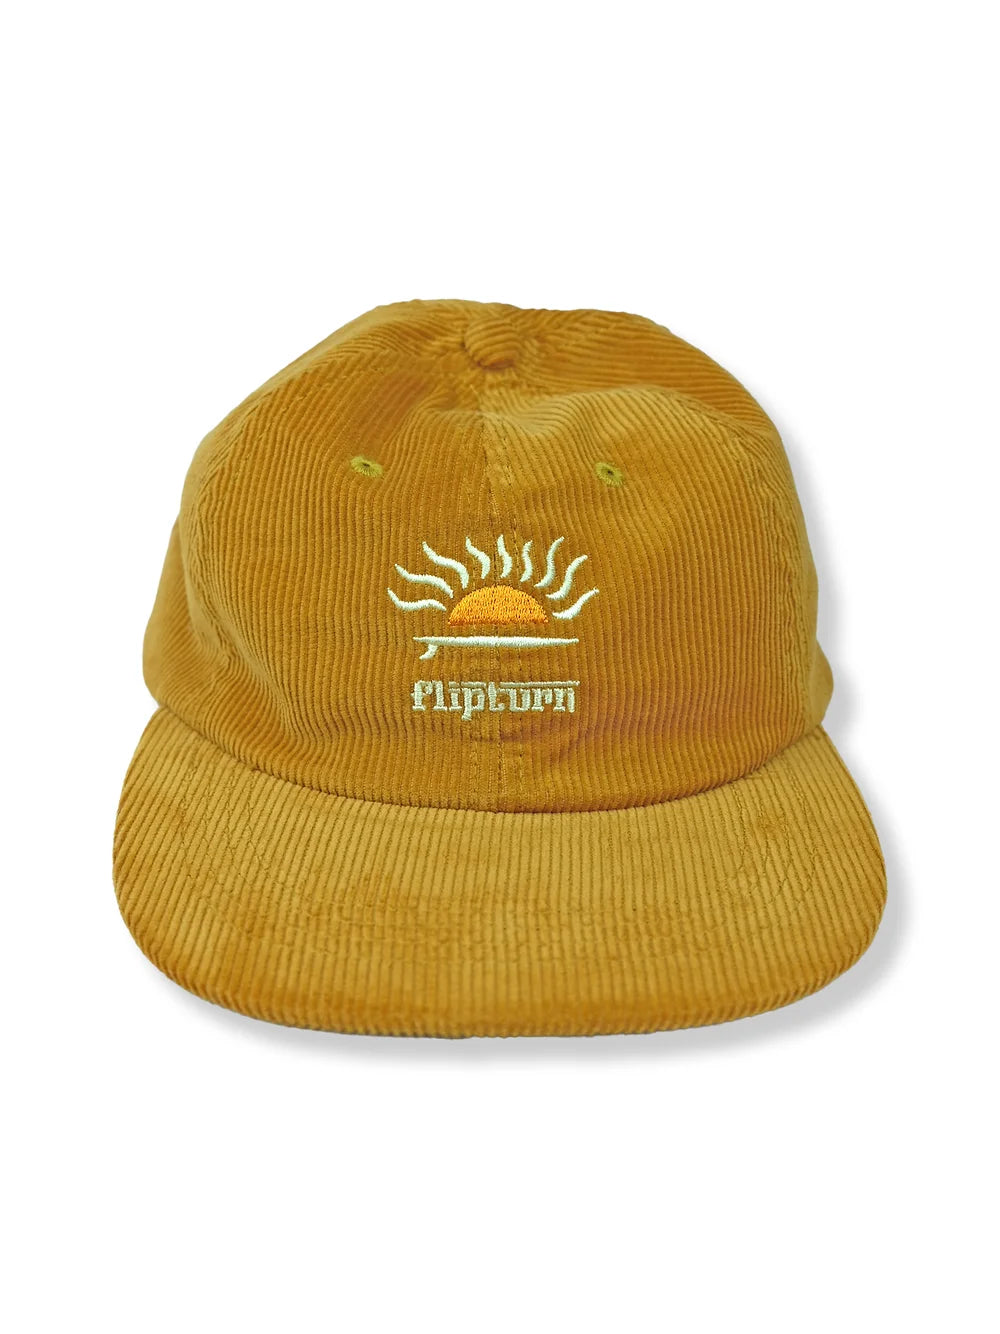 Flipturn x Beaten Path Co Hat